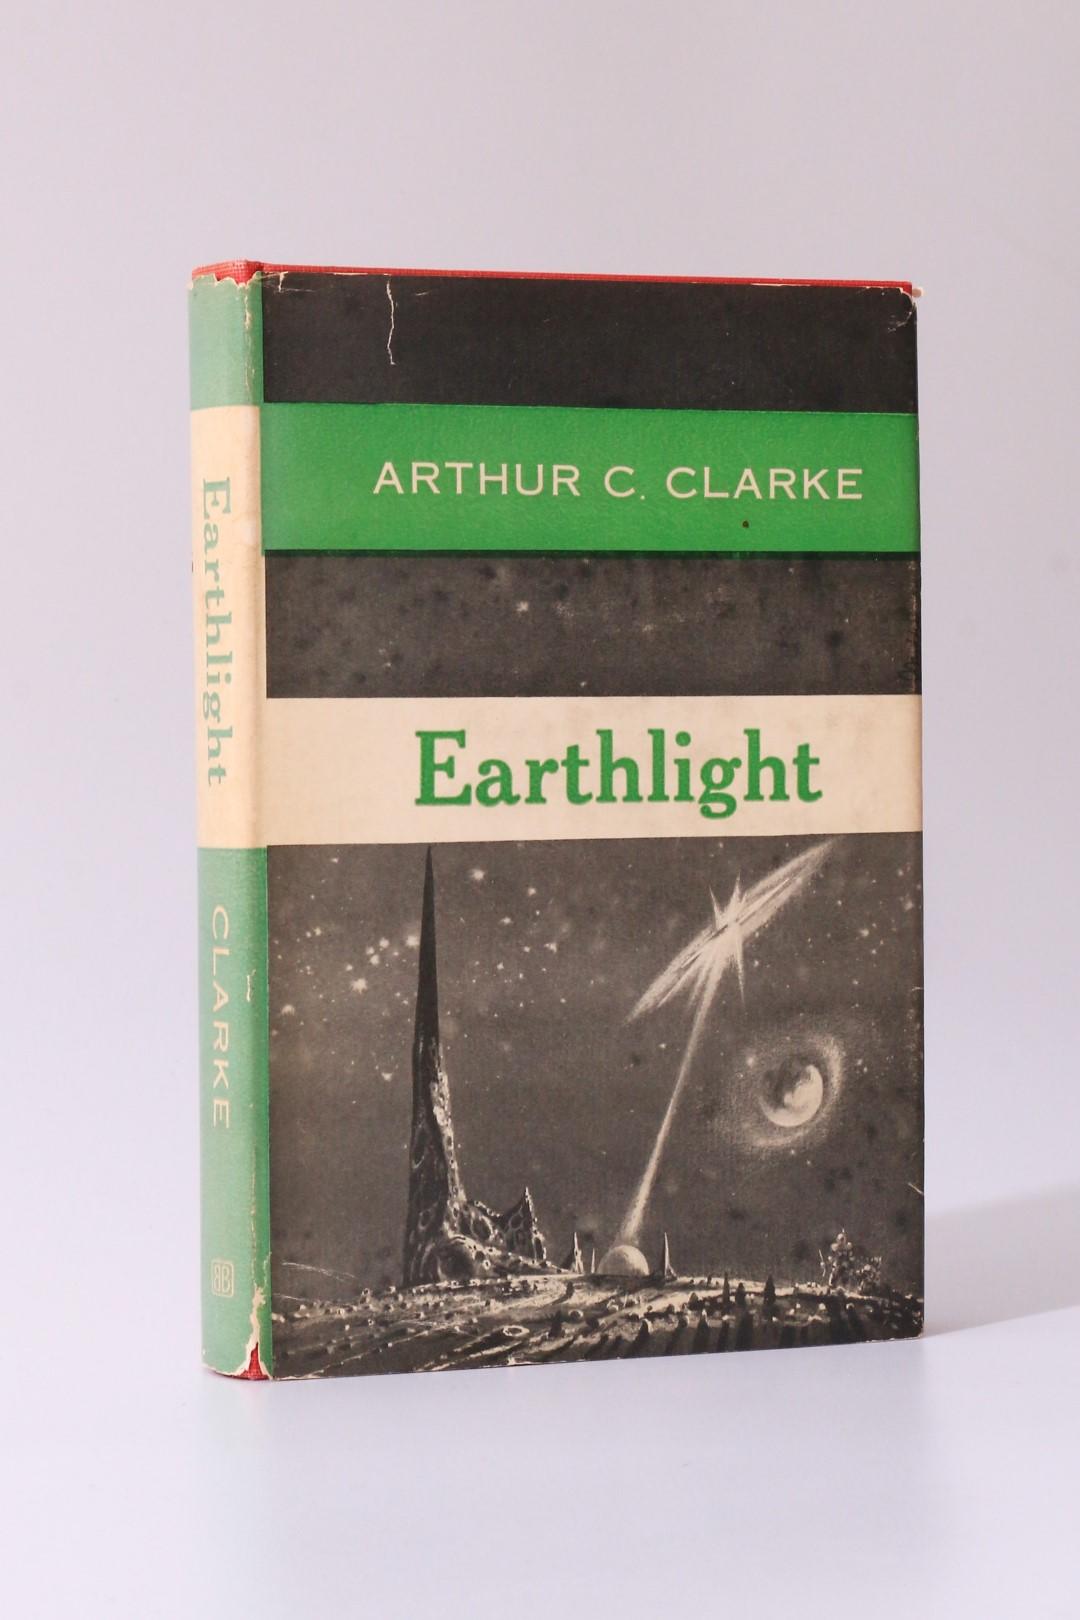 Arthur C. Clarke - Earthlight - Ballantine Books, 1955, First Edition.